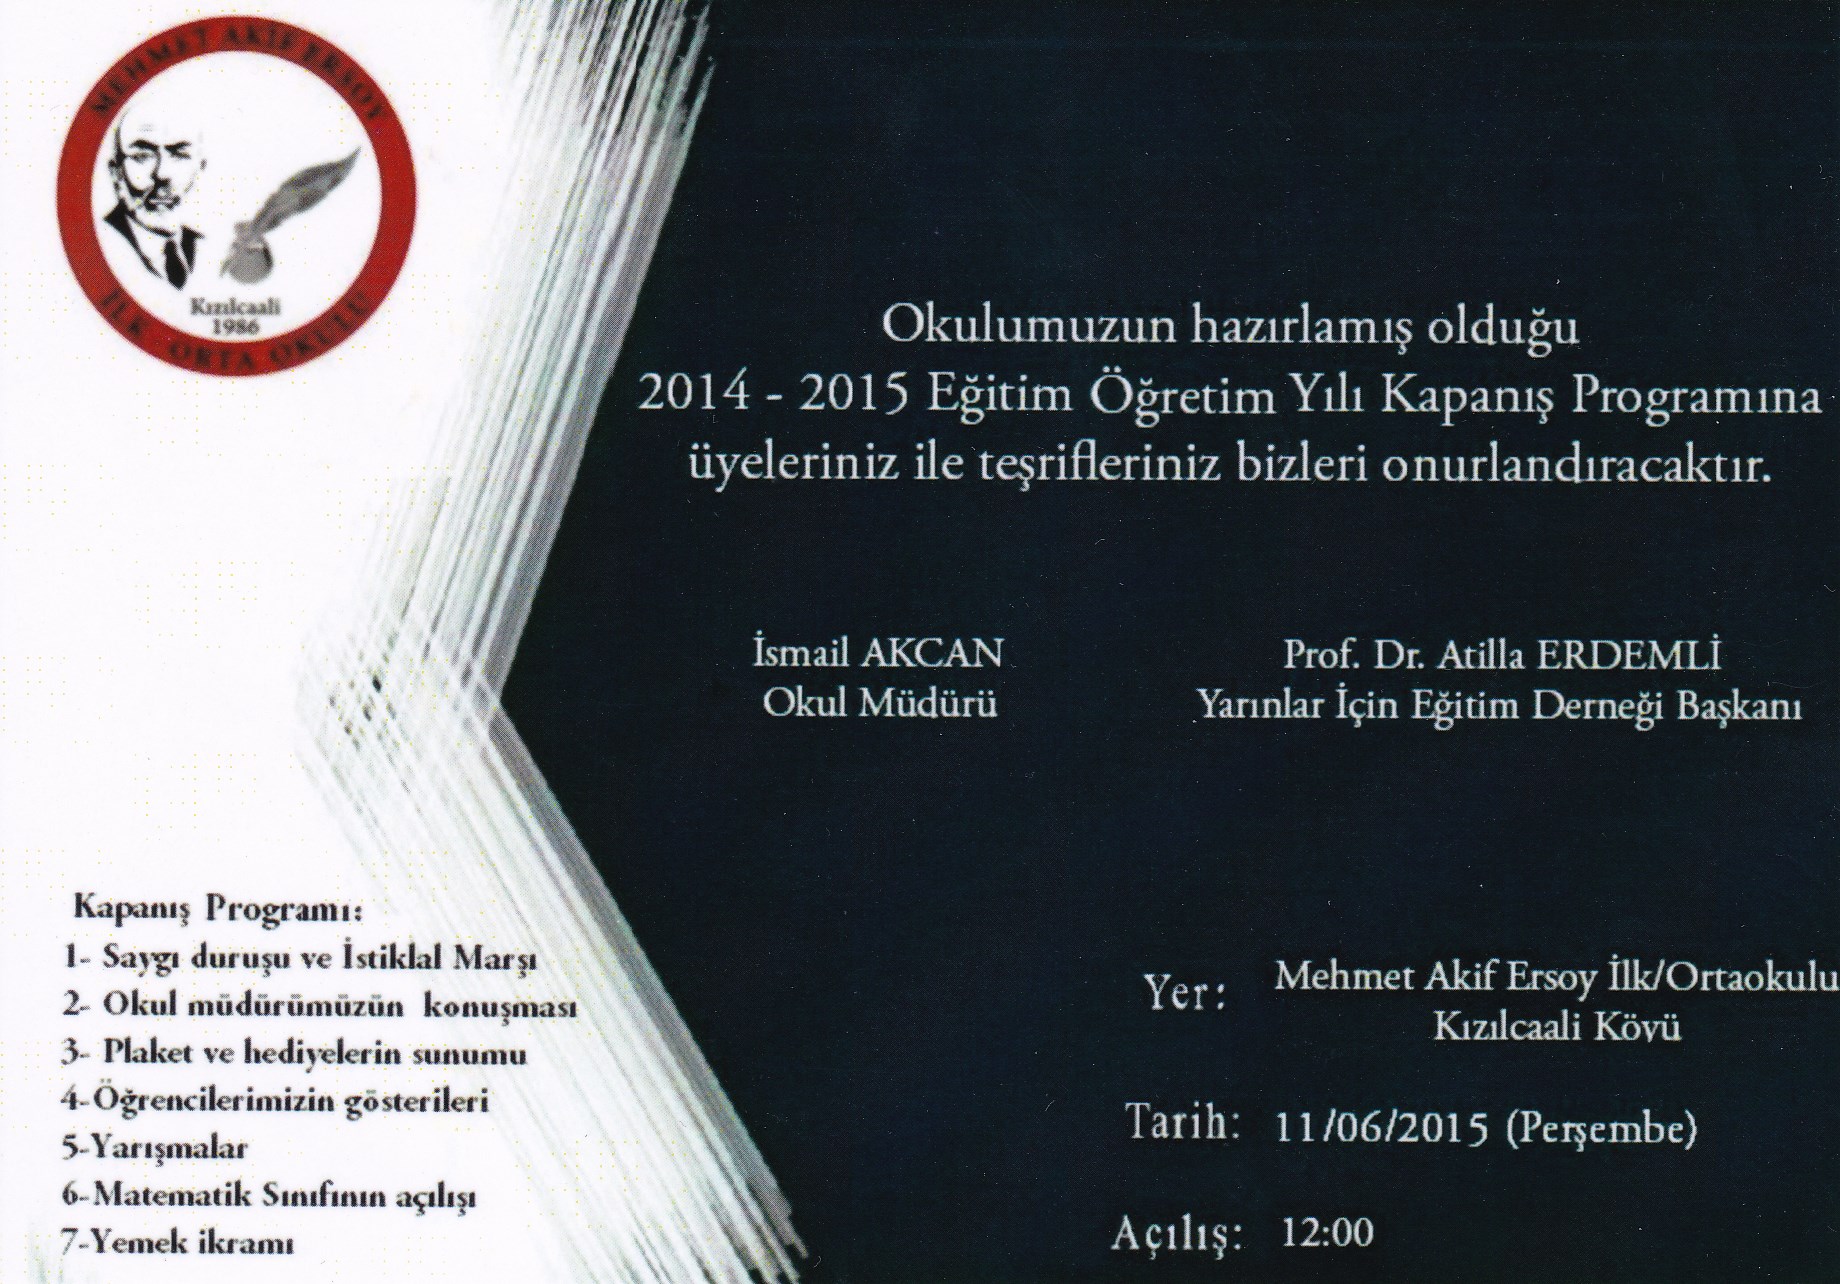 Mehmet Akif Ersoy lk/Ortaokul'u 2014-2015 Eitim retim Yl Kapan Program